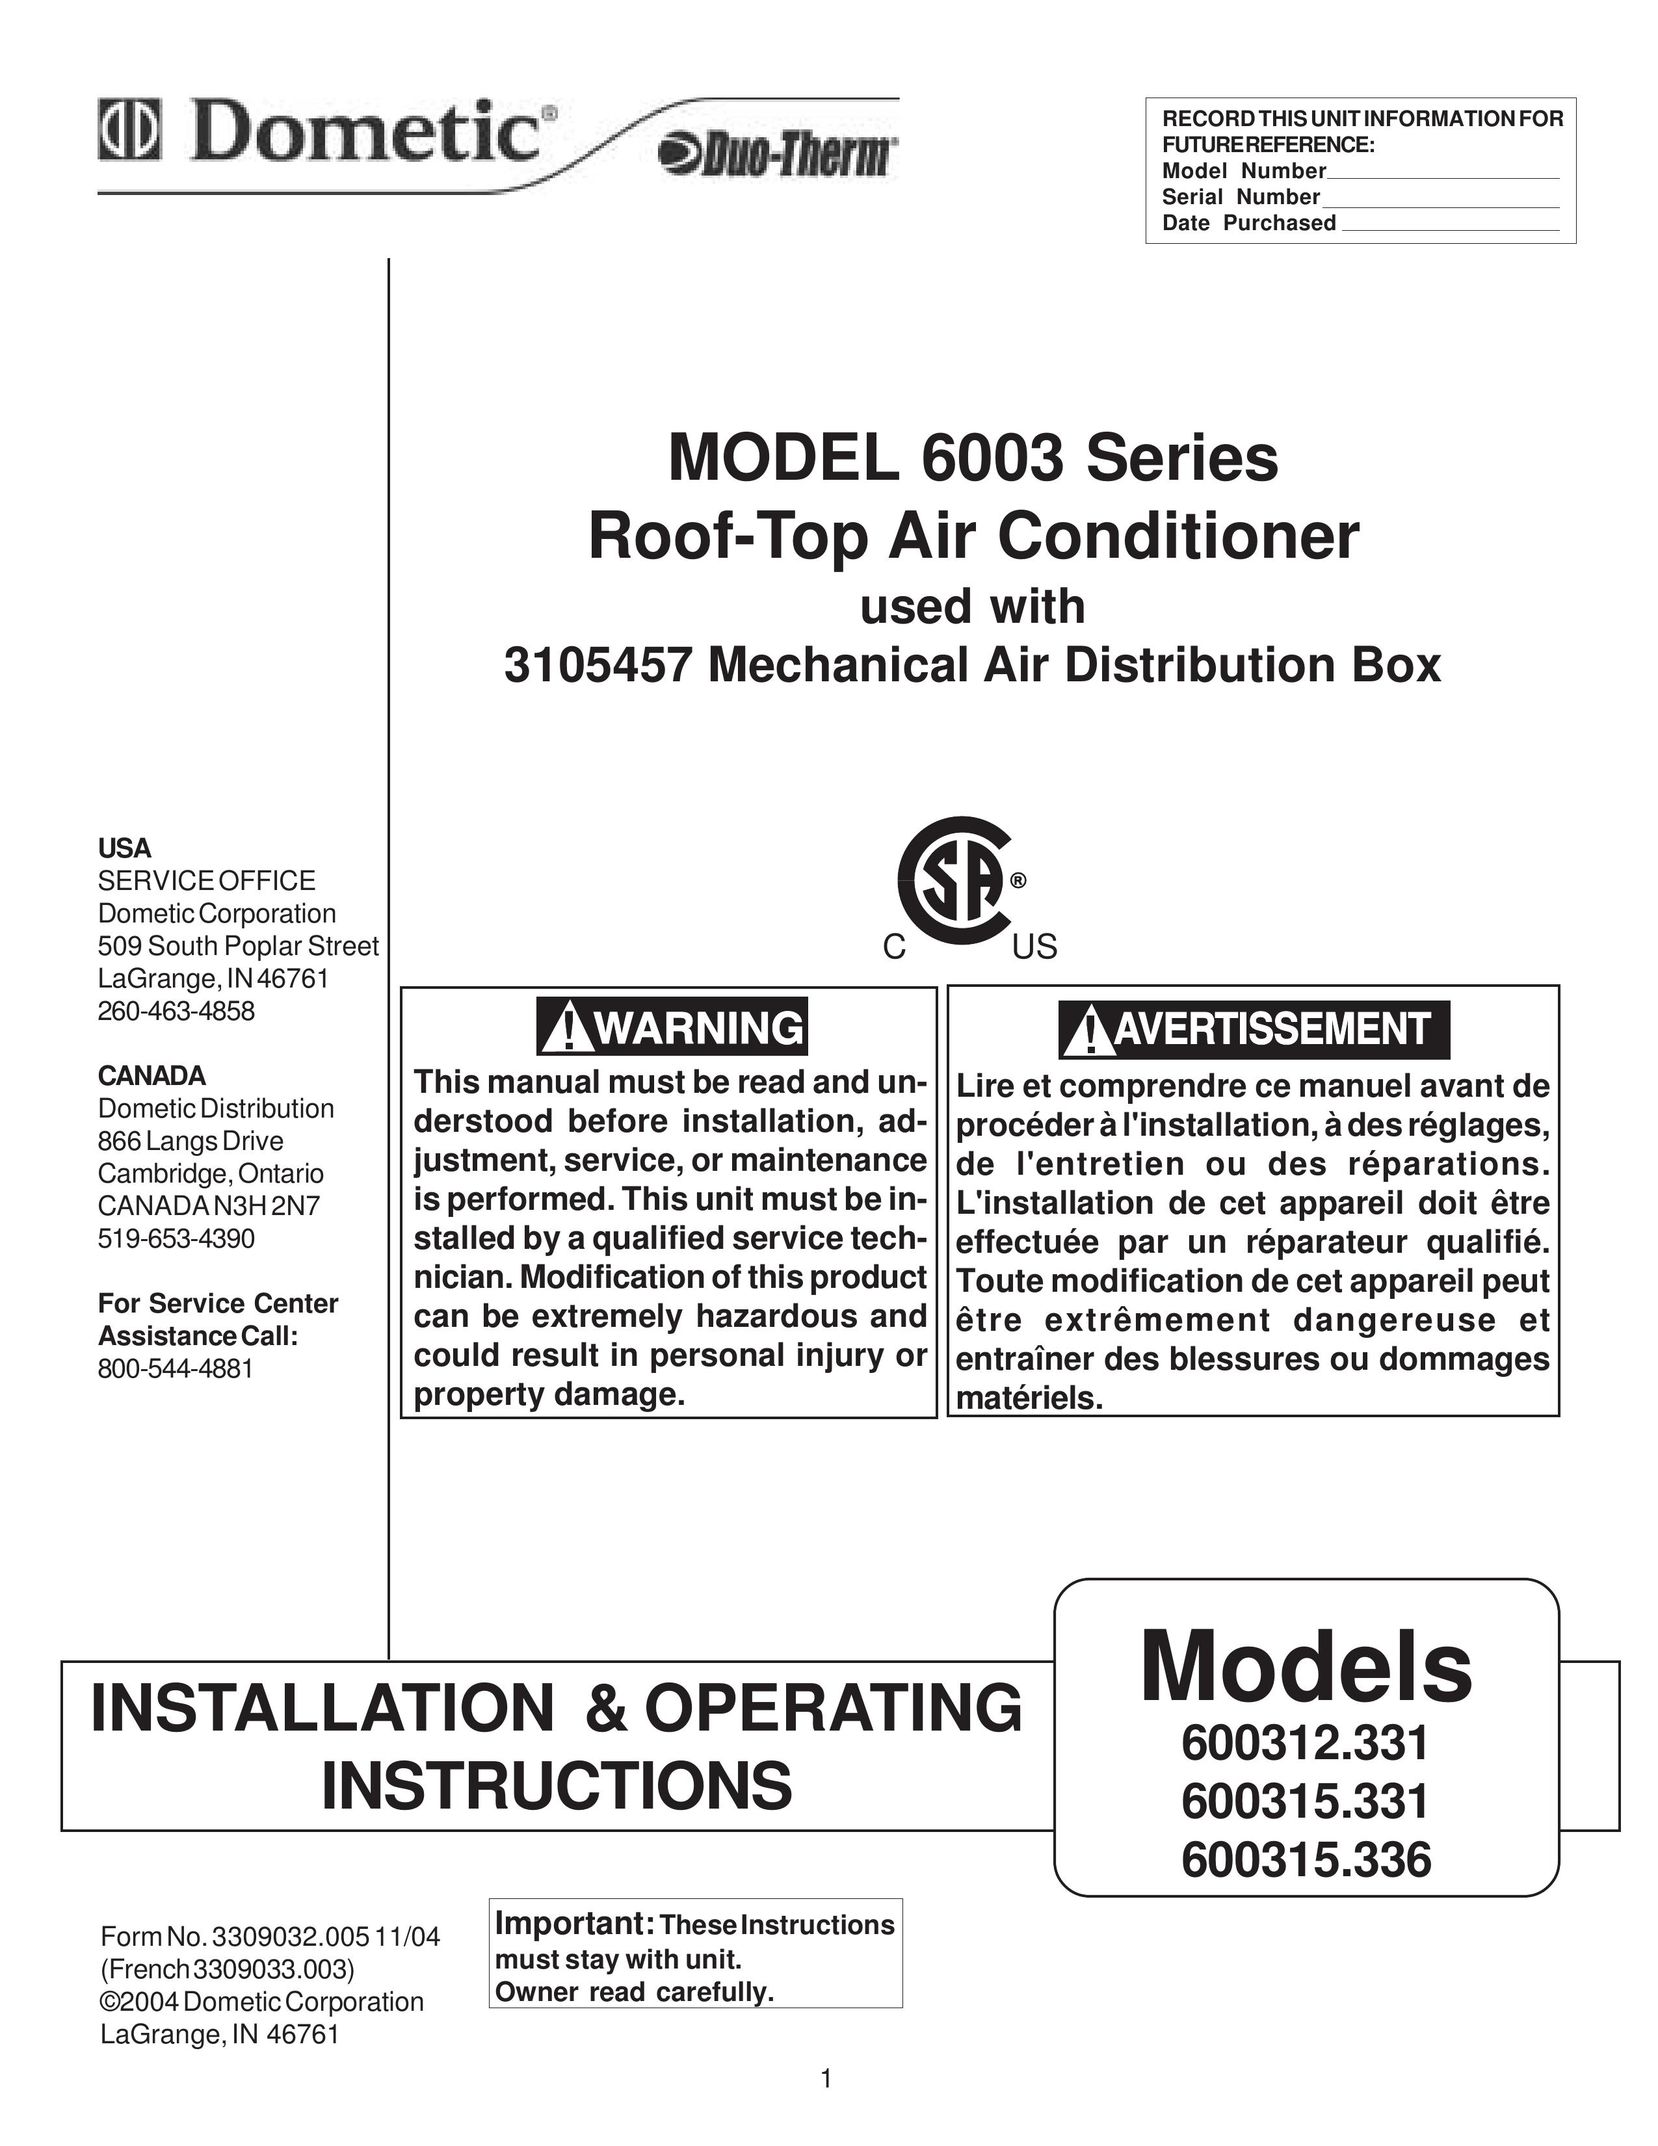 Dometic 600312.331 Air Conditioner User Manual